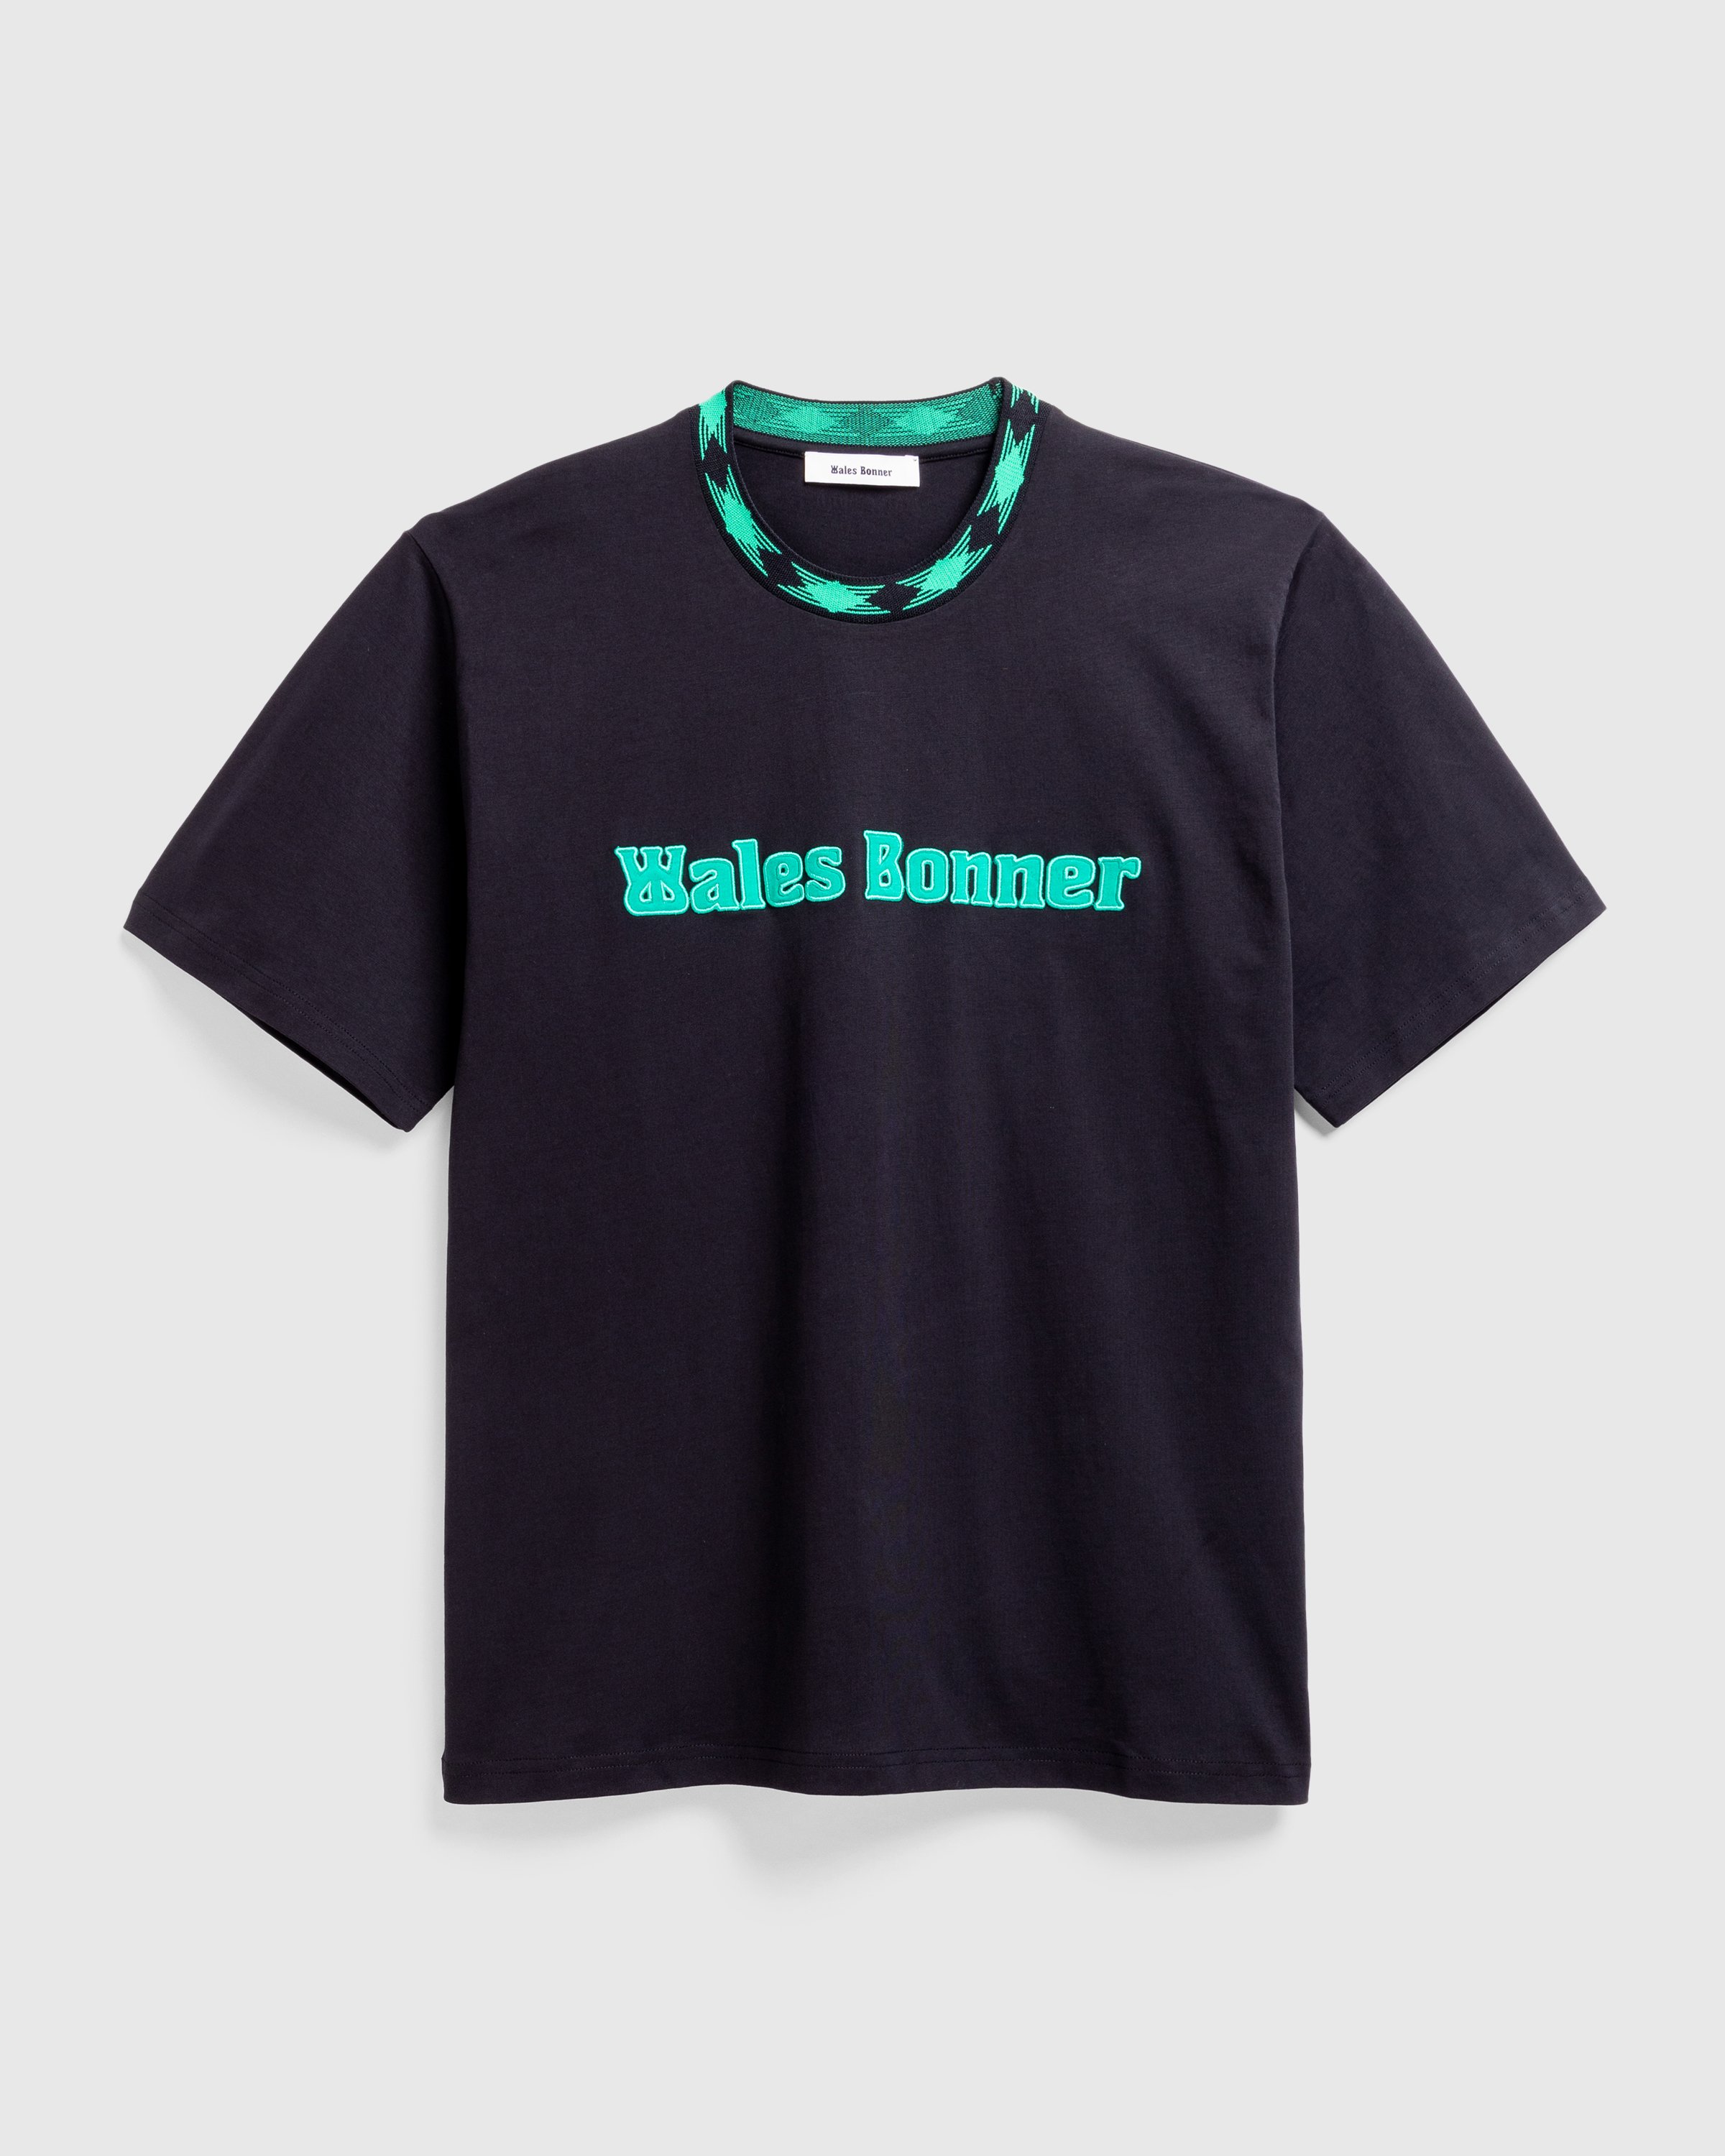 Wales Bonner - Plain T-Shirt Jersey Black - Clothing - Black - Image 1